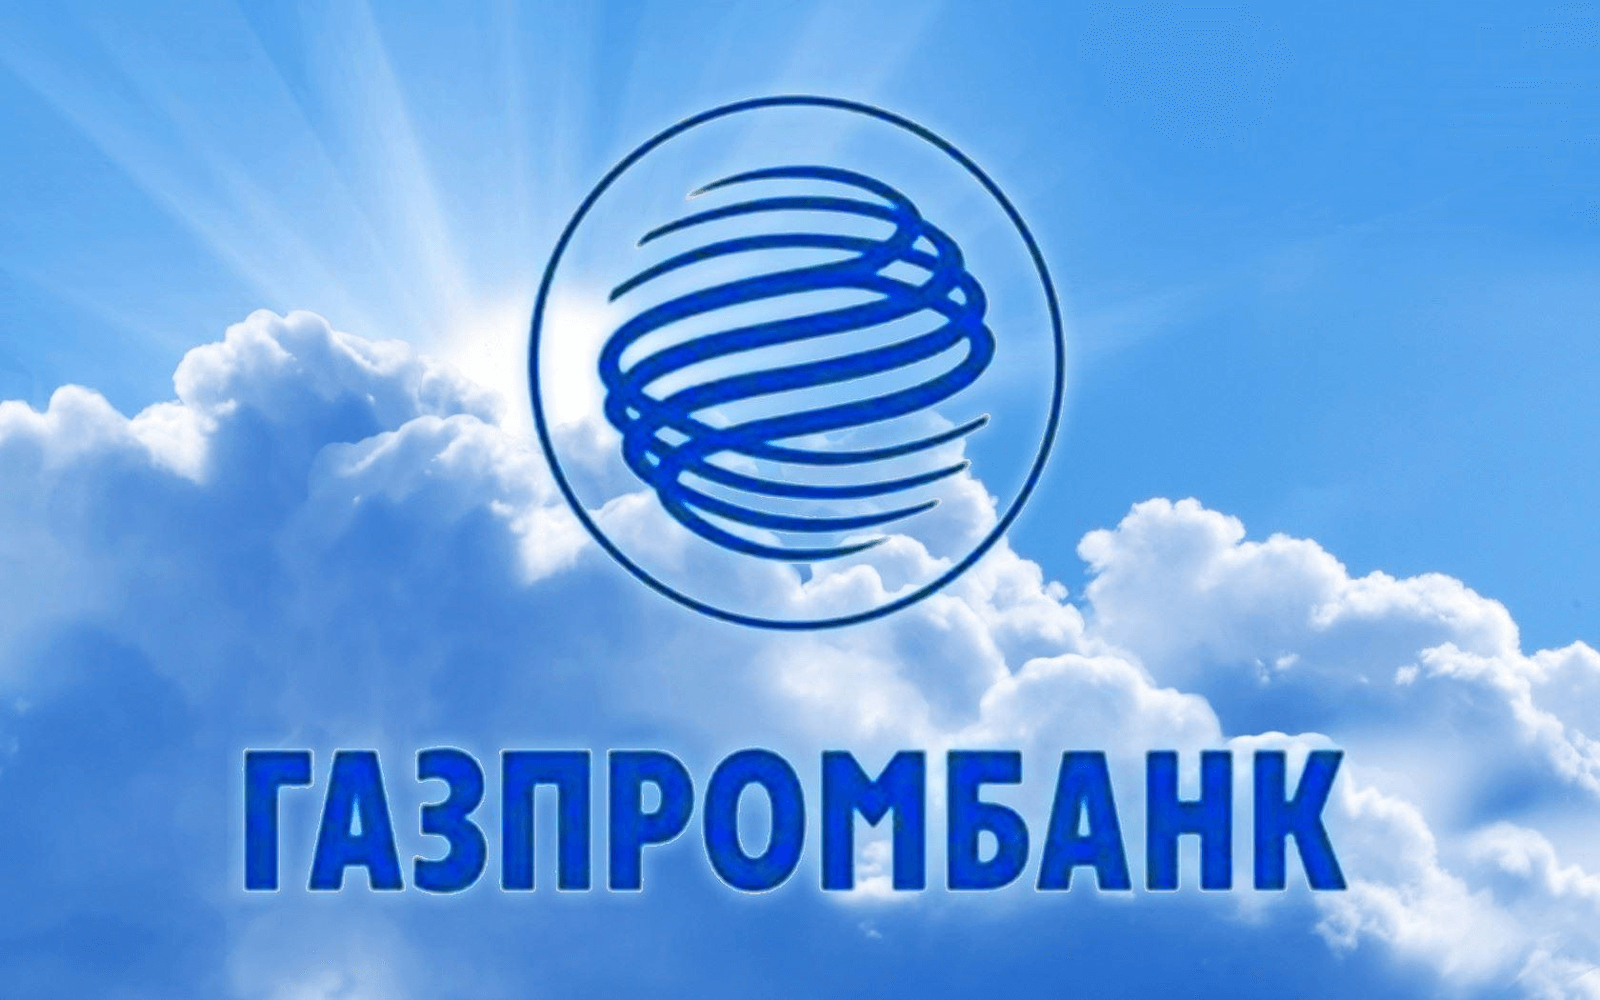 Логотип газпромбанка. Газпромбанк. Газпромбанк эмблема. Газпромбанк картинки. Газпромбанк логотип 2021.